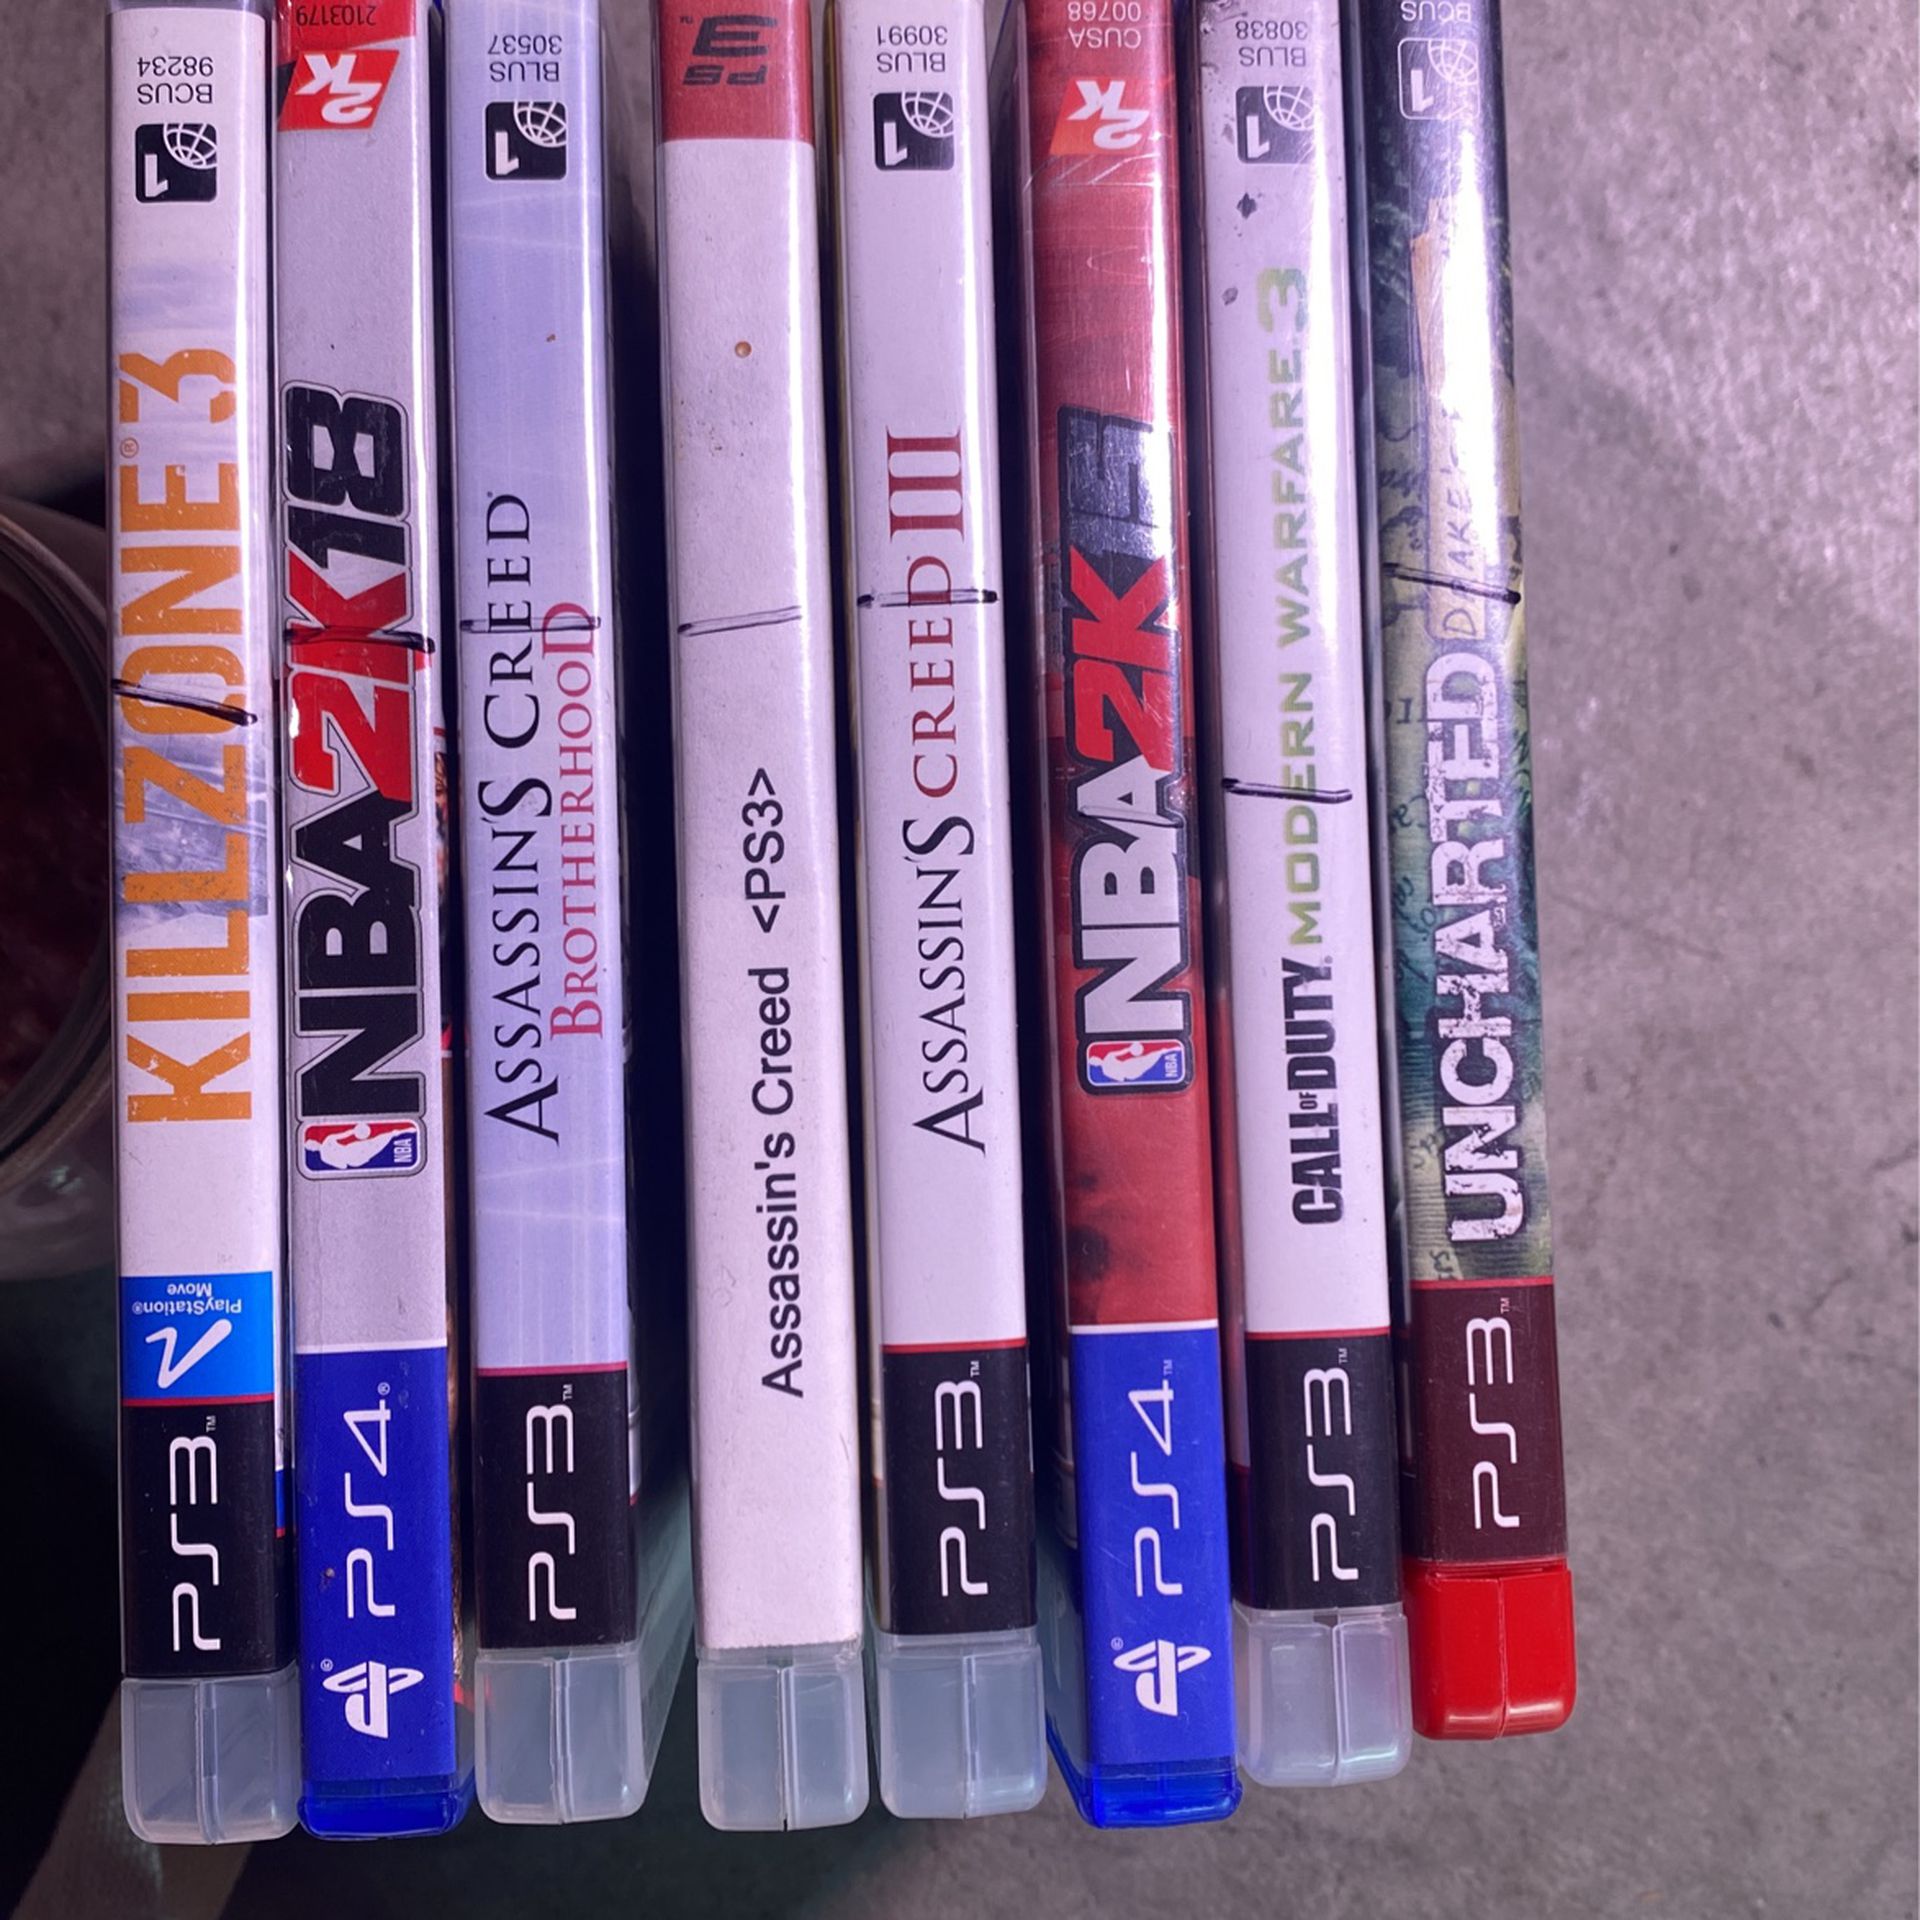 PS3 Games 